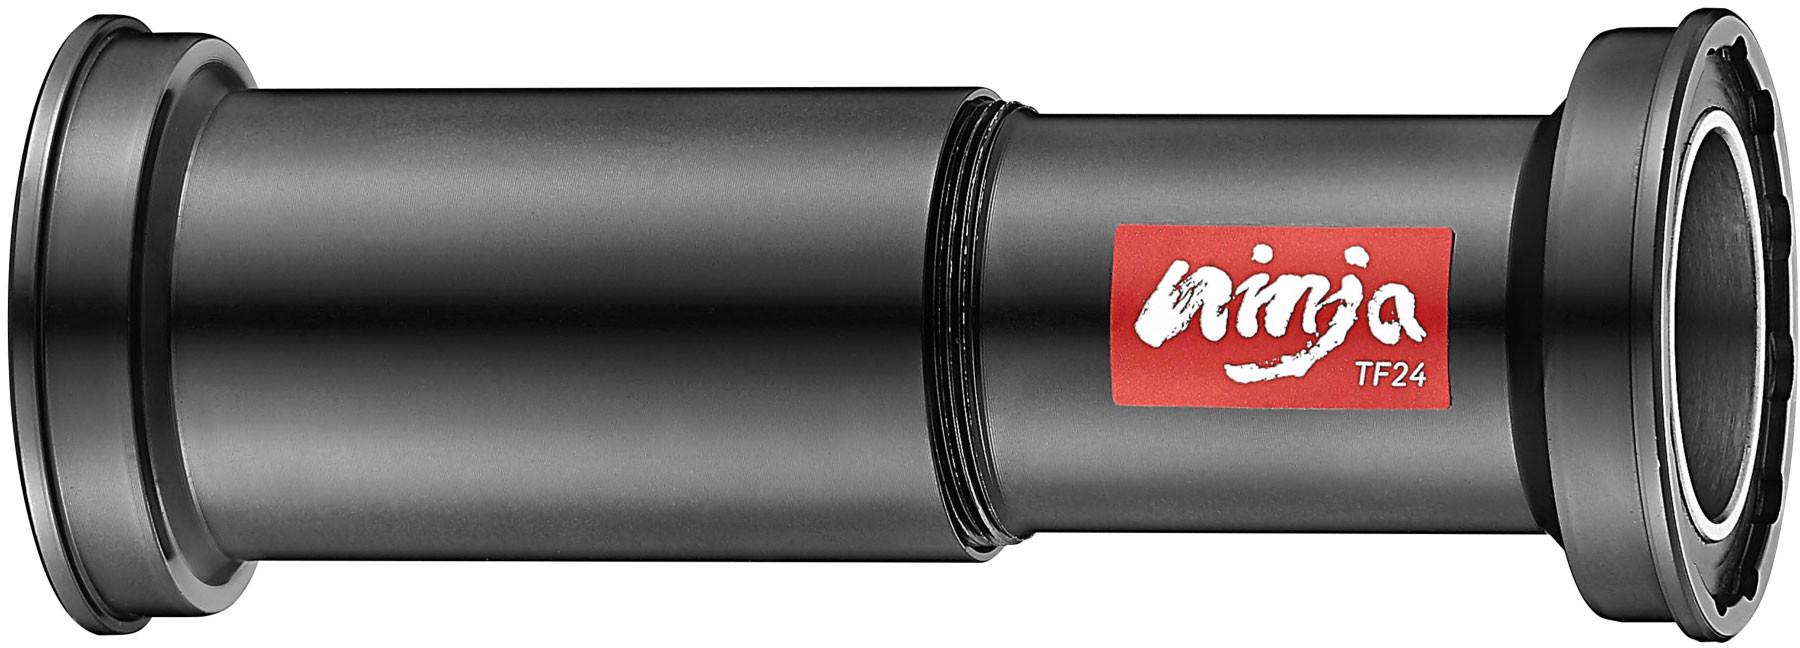 Token Ninja Trek Bb90/bb95 24mm Bottom Bracket - Black